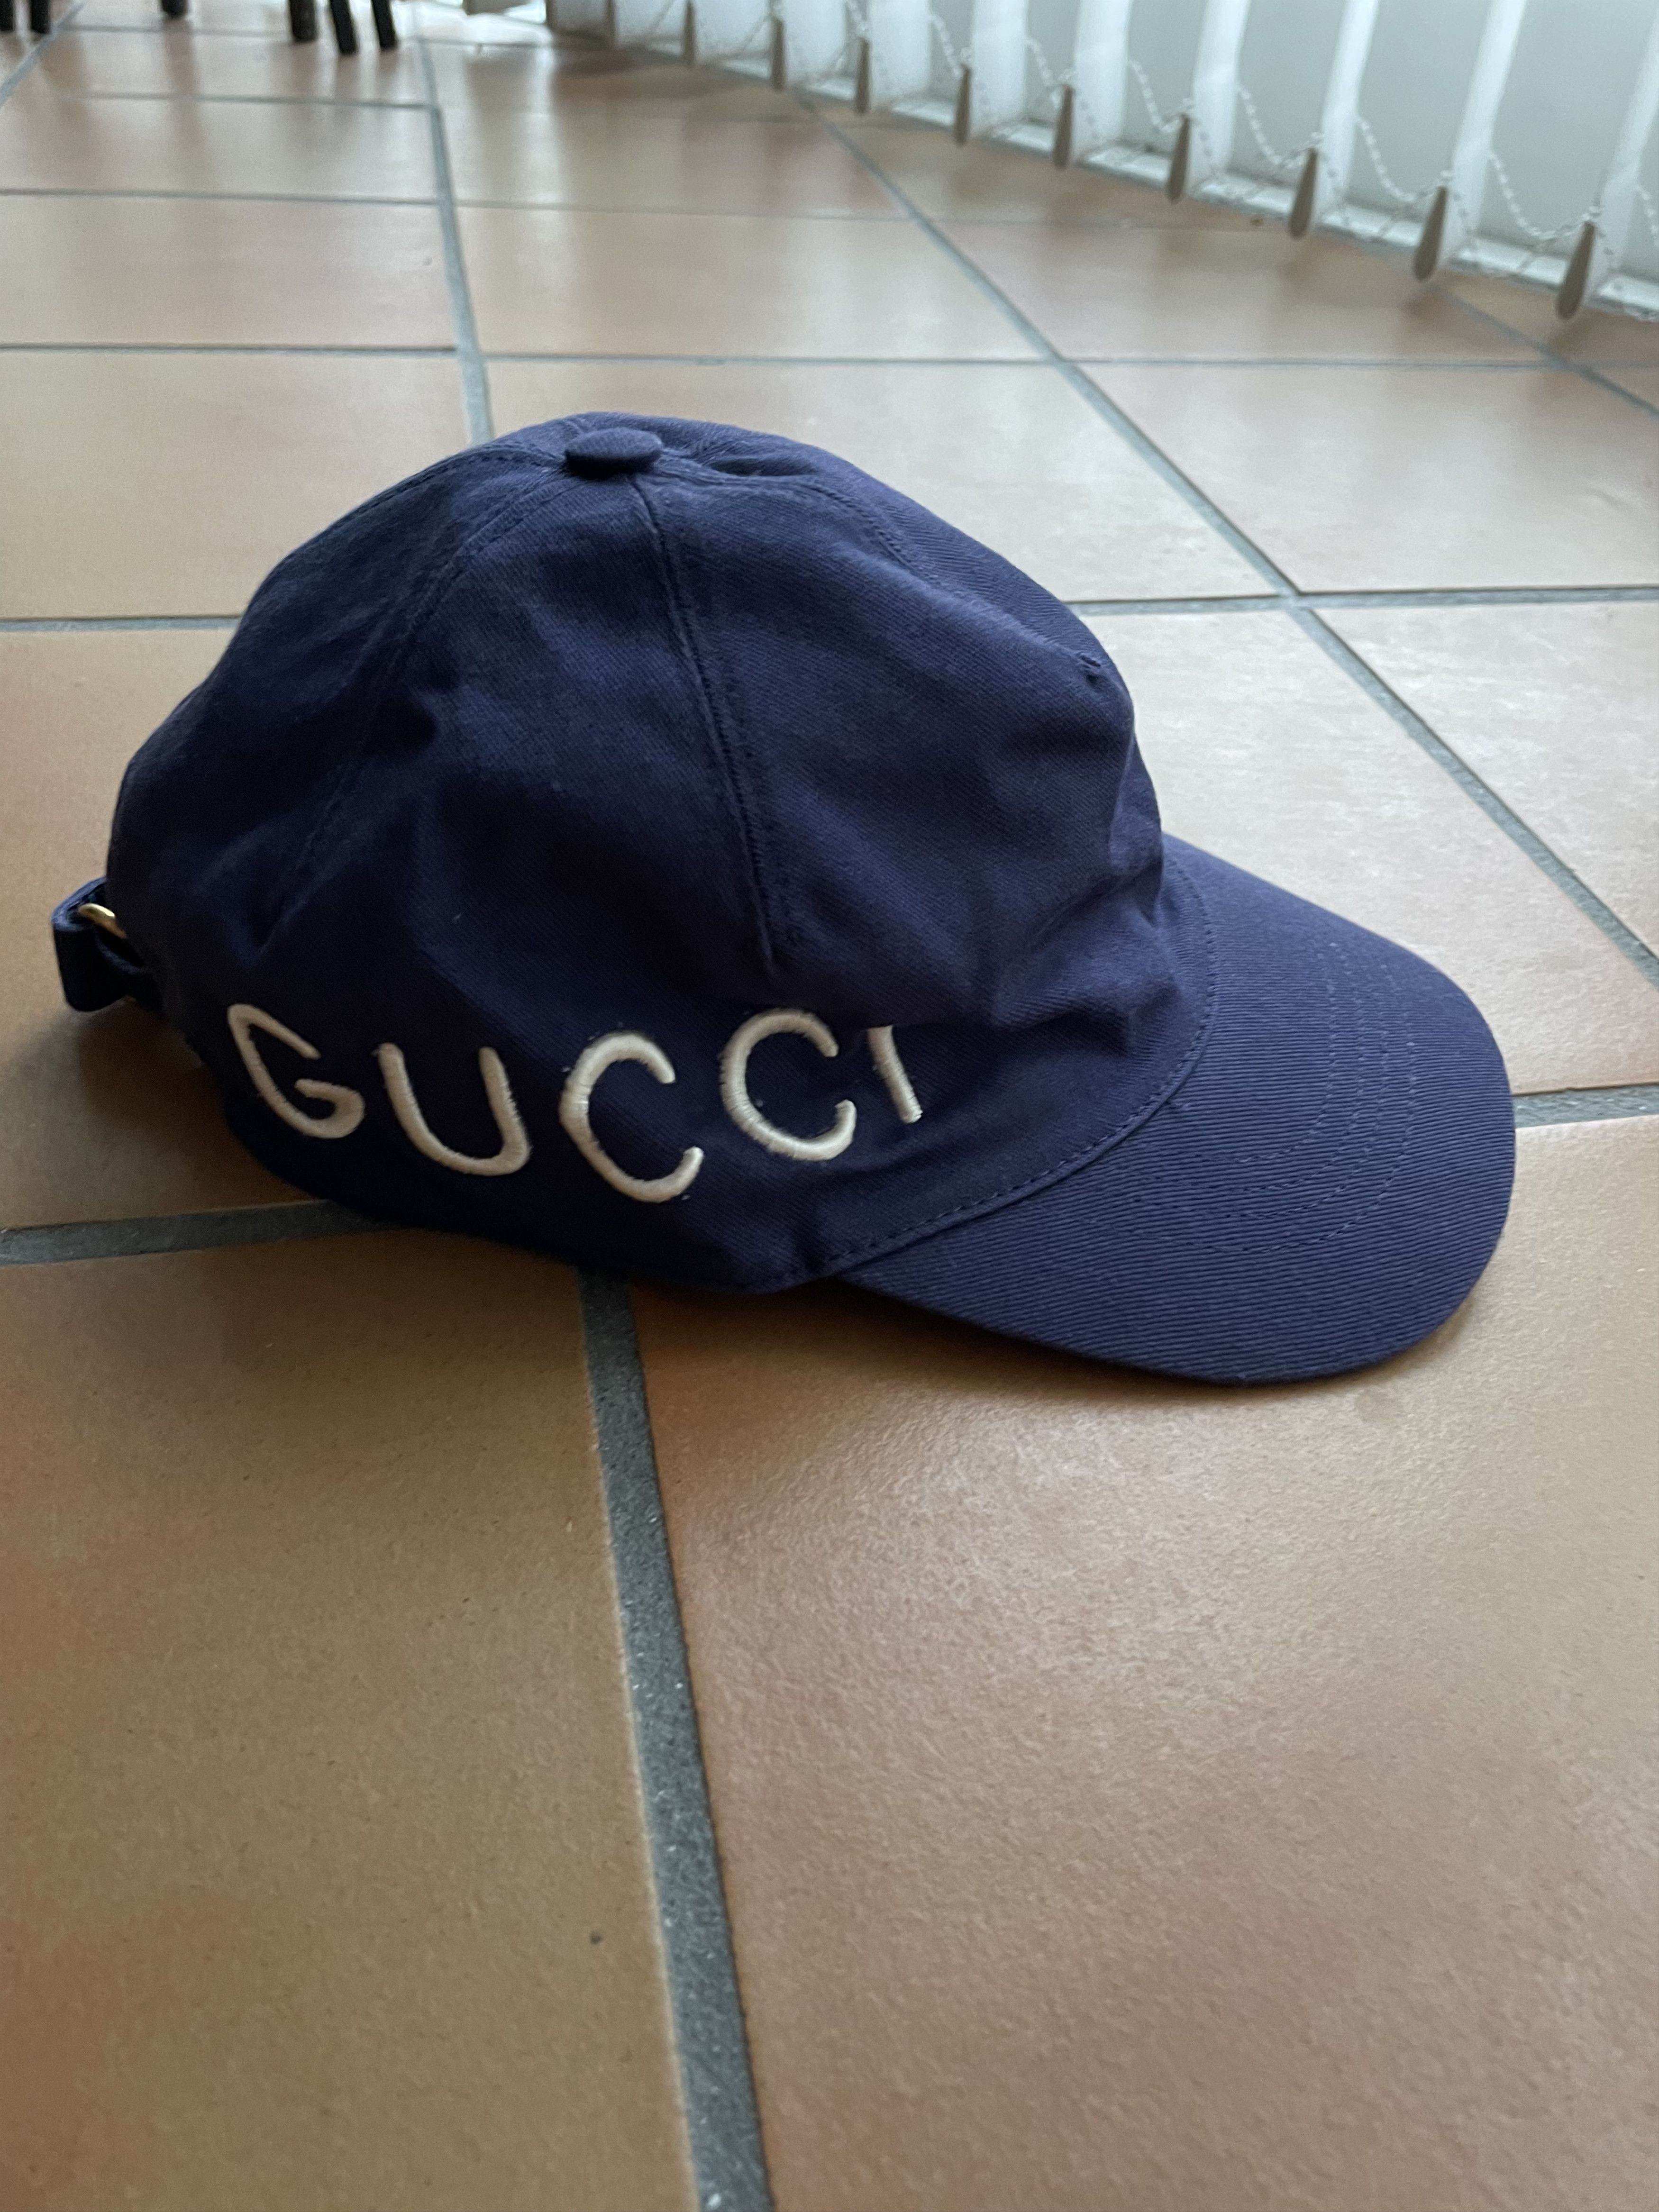 Gucci Gucci Loved cap | Grailed